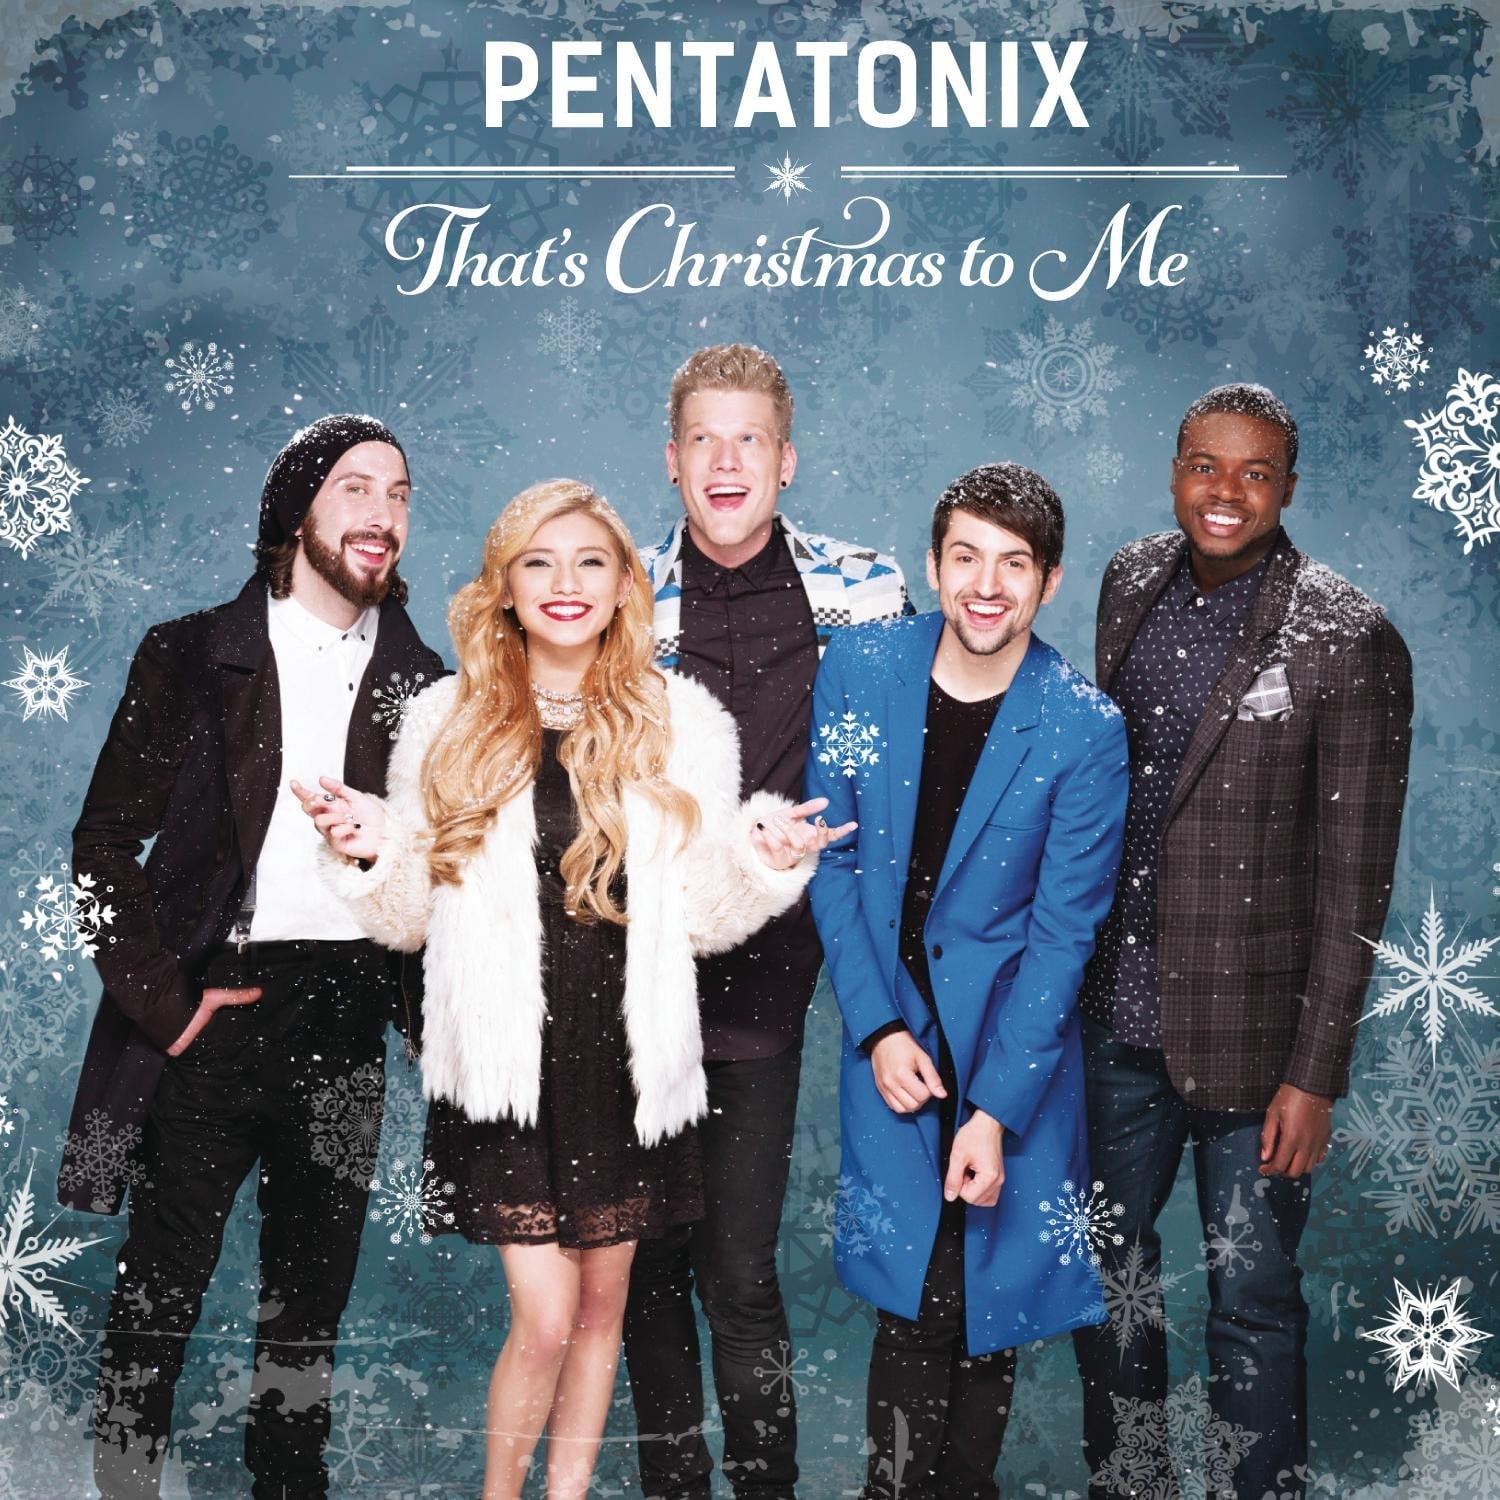 Christmas music favorites Pentatonix